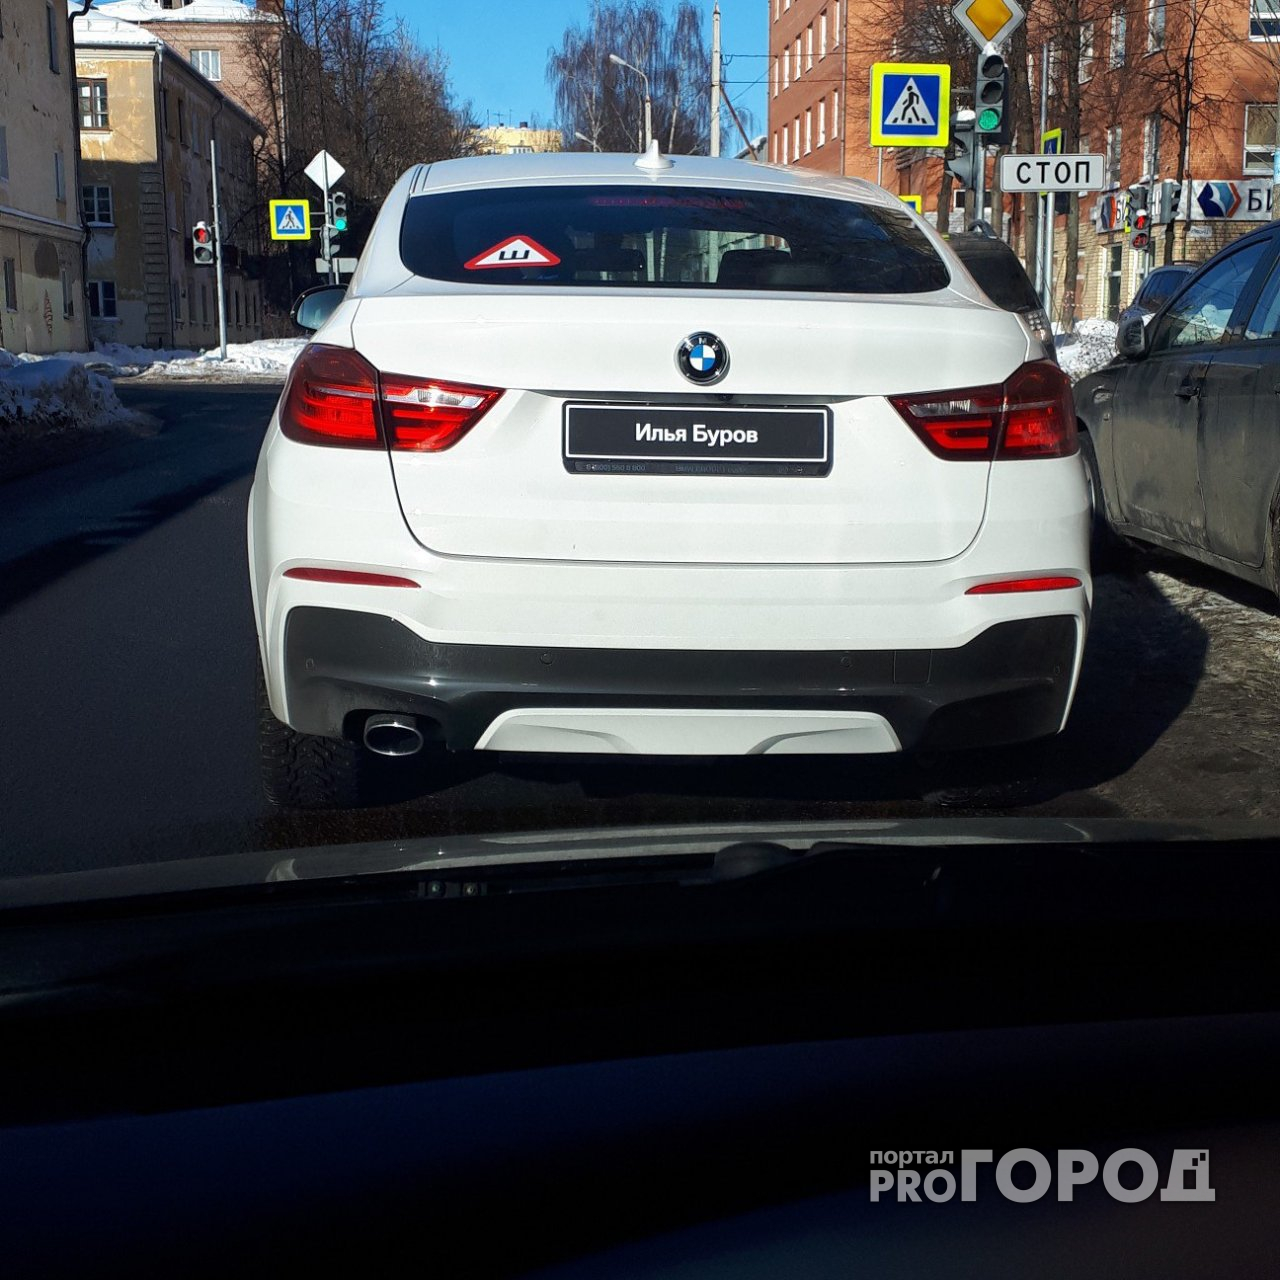 Водители засняли новую BMW ярославского олимпийца